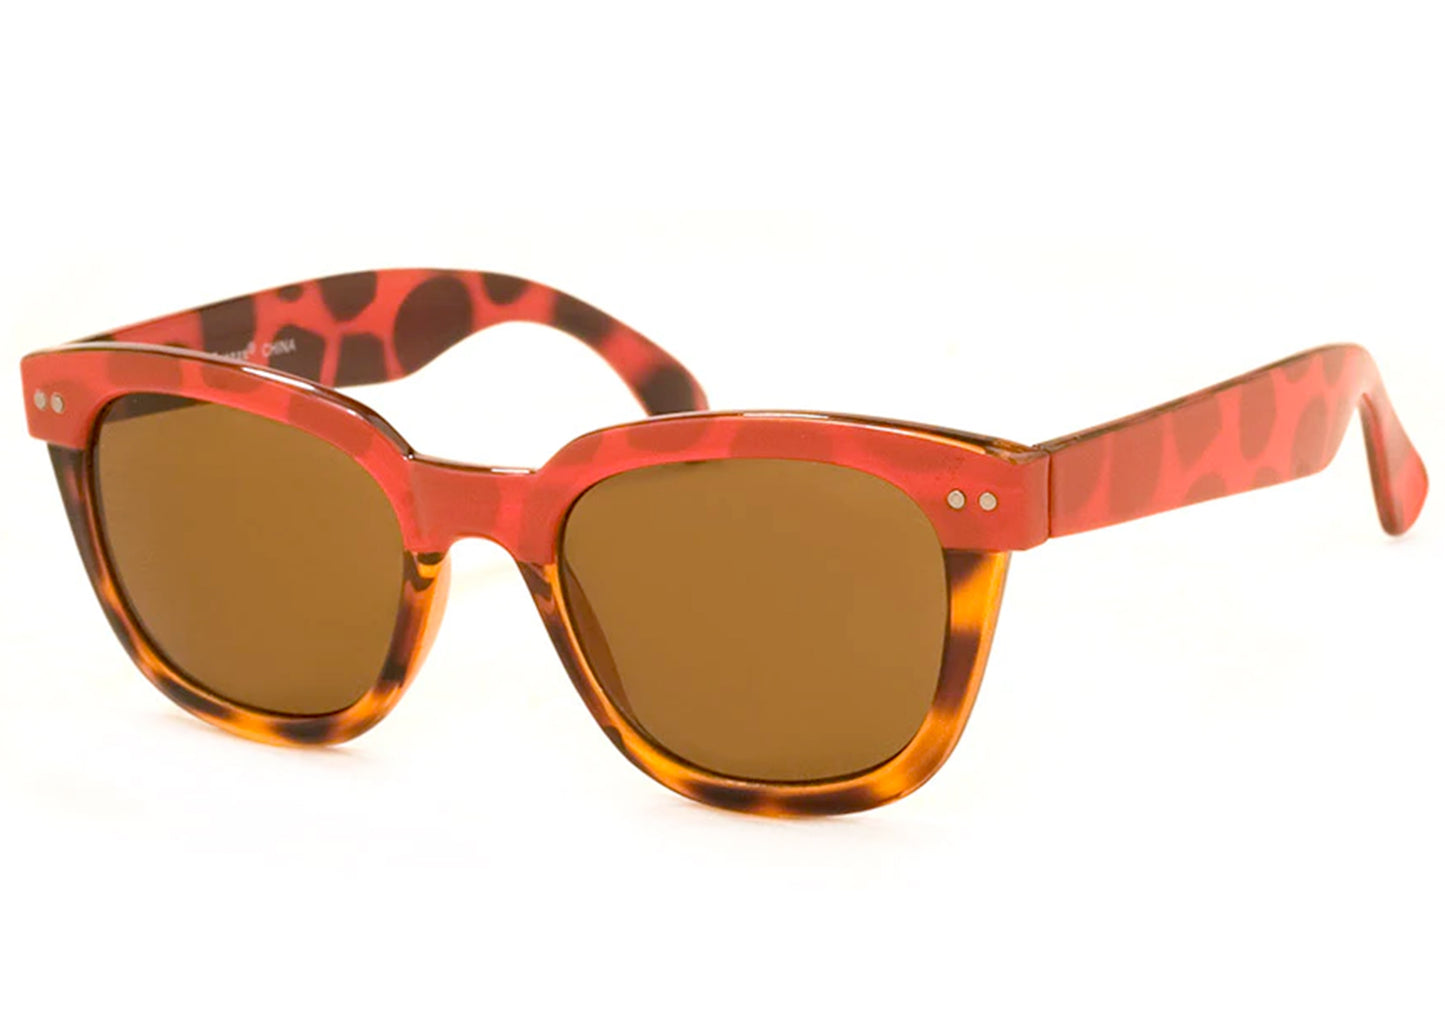 New School Sunglasses in Red/Tortoise